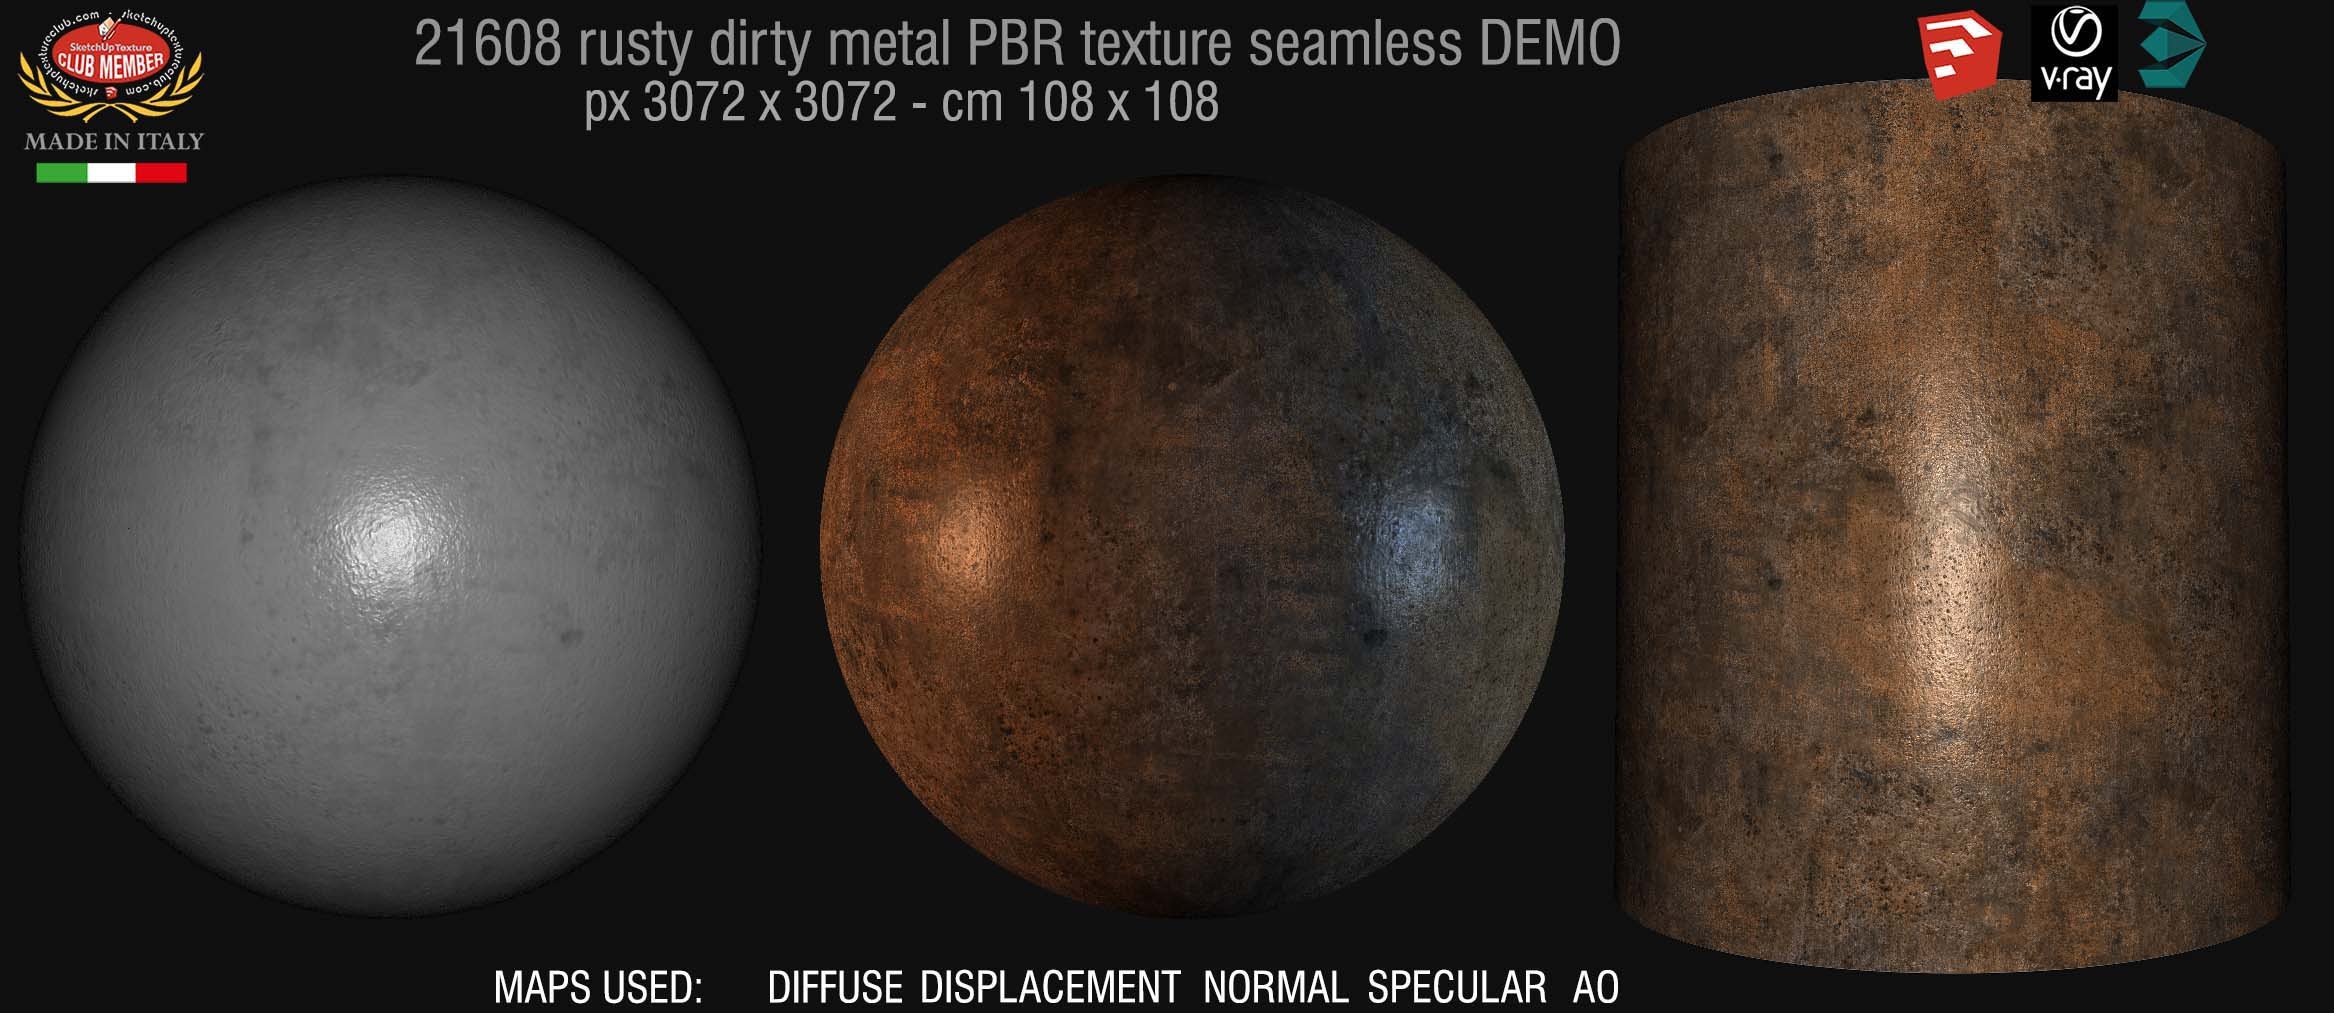 21608 rusty dirty metal PBR texture seamless DEMO